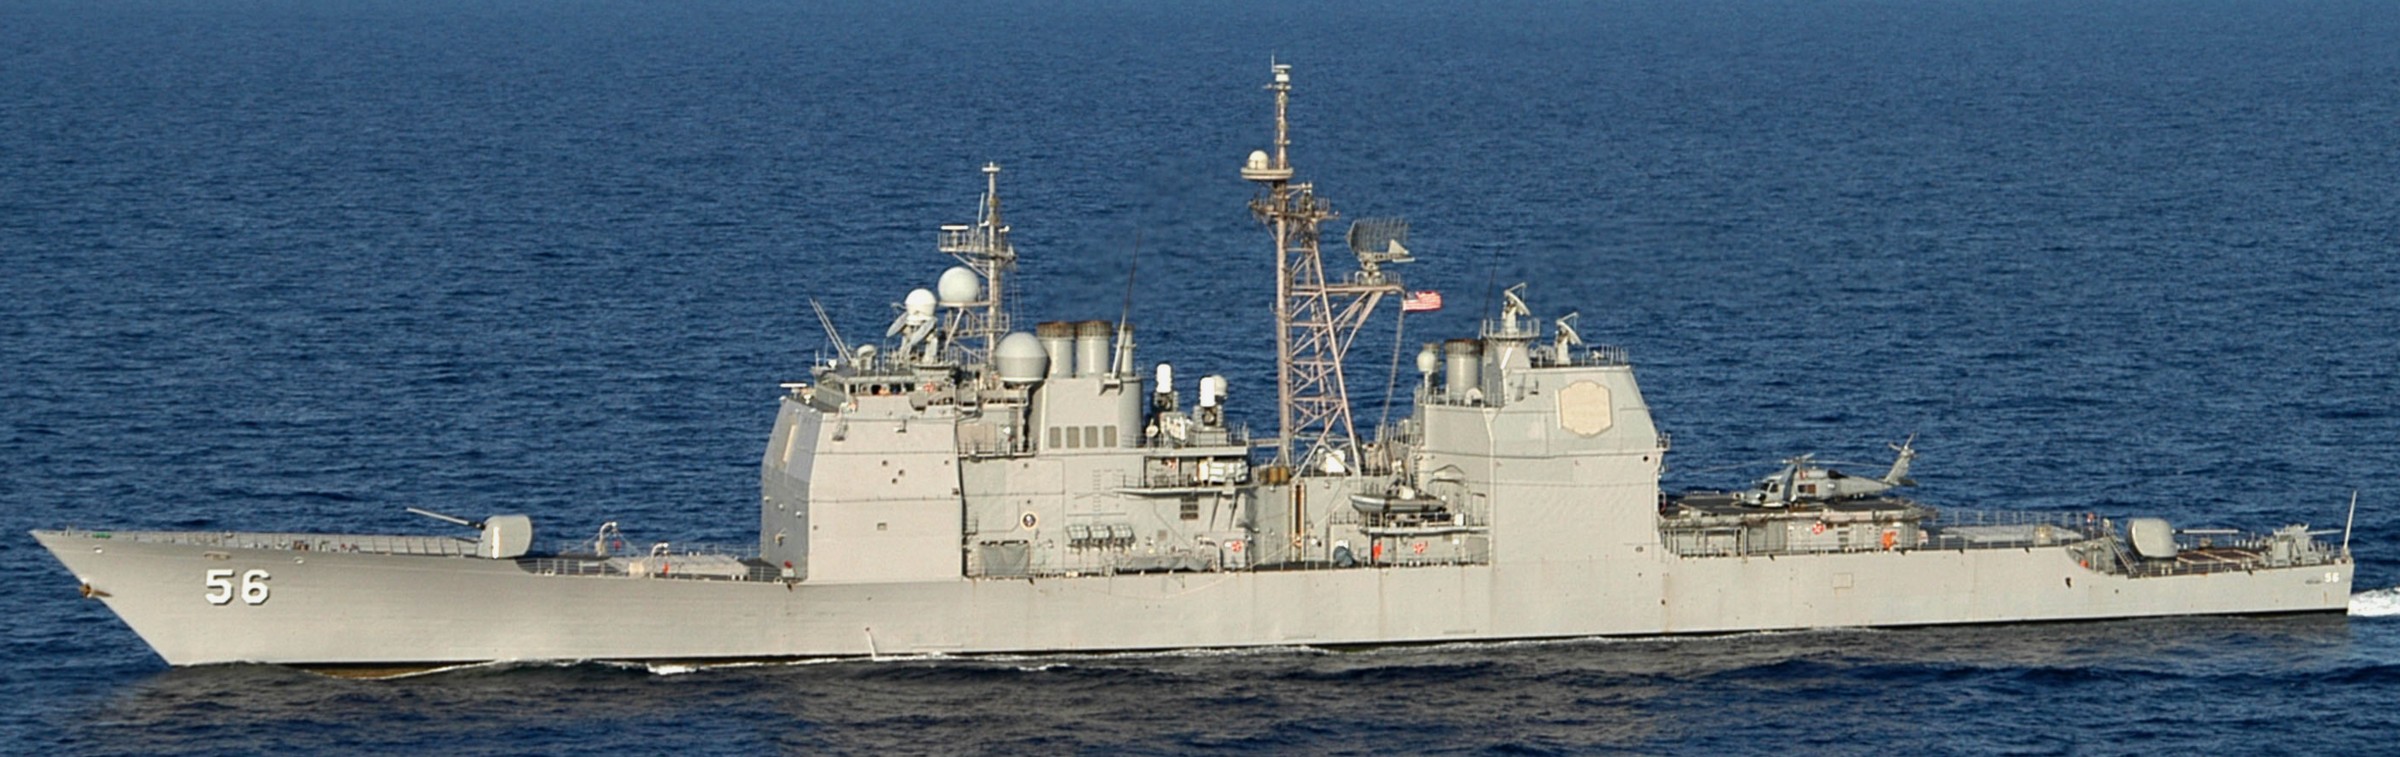 cg-56 uss san jacinto ticonderoga class guided missile cruiser aegis us navy 13